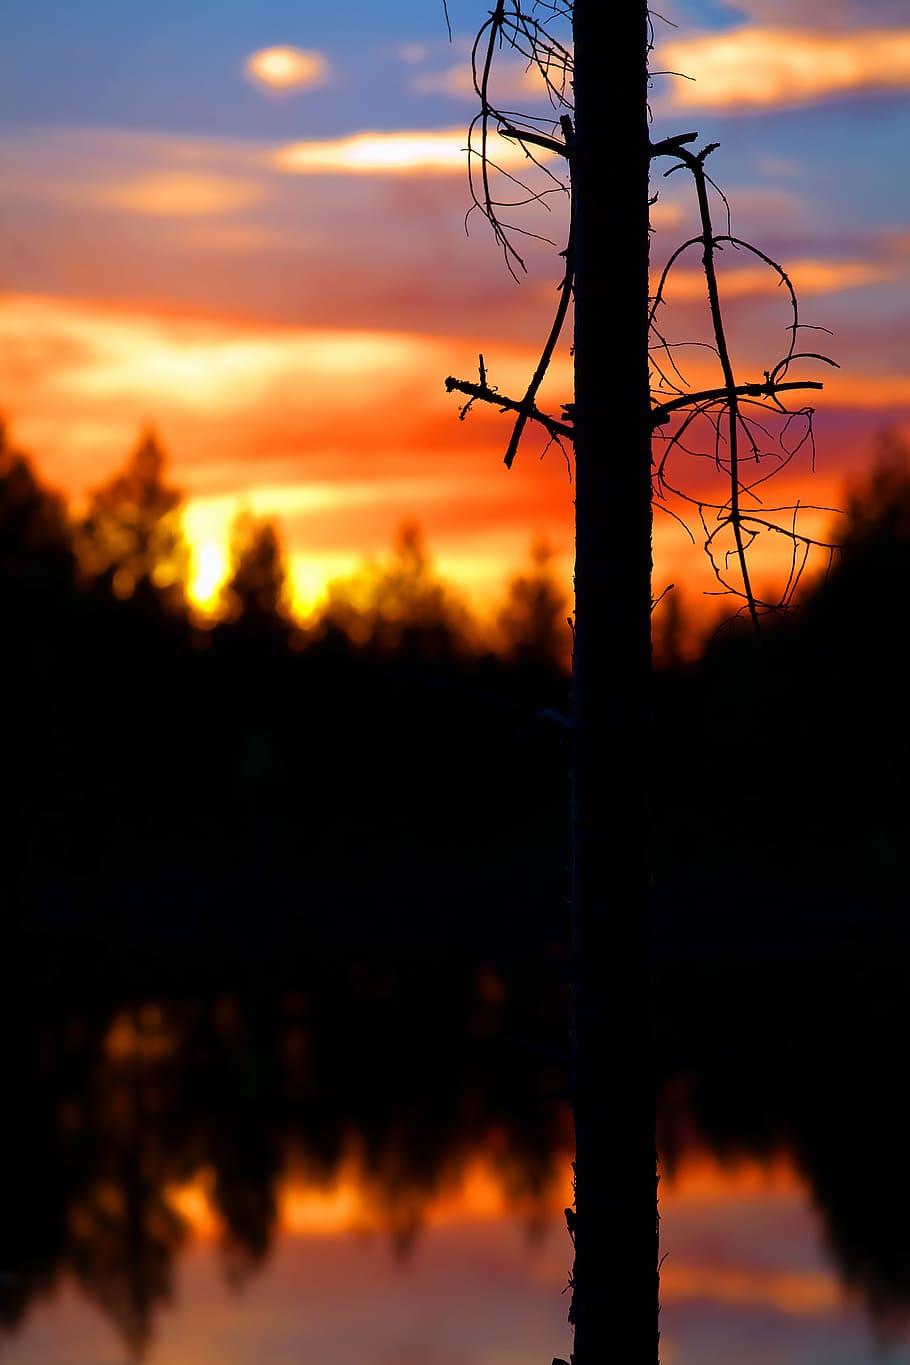 silueta de árbol, silueta, árbol, foto, puesta de sol, anochecer, agua, reflexión, cielo, árboles